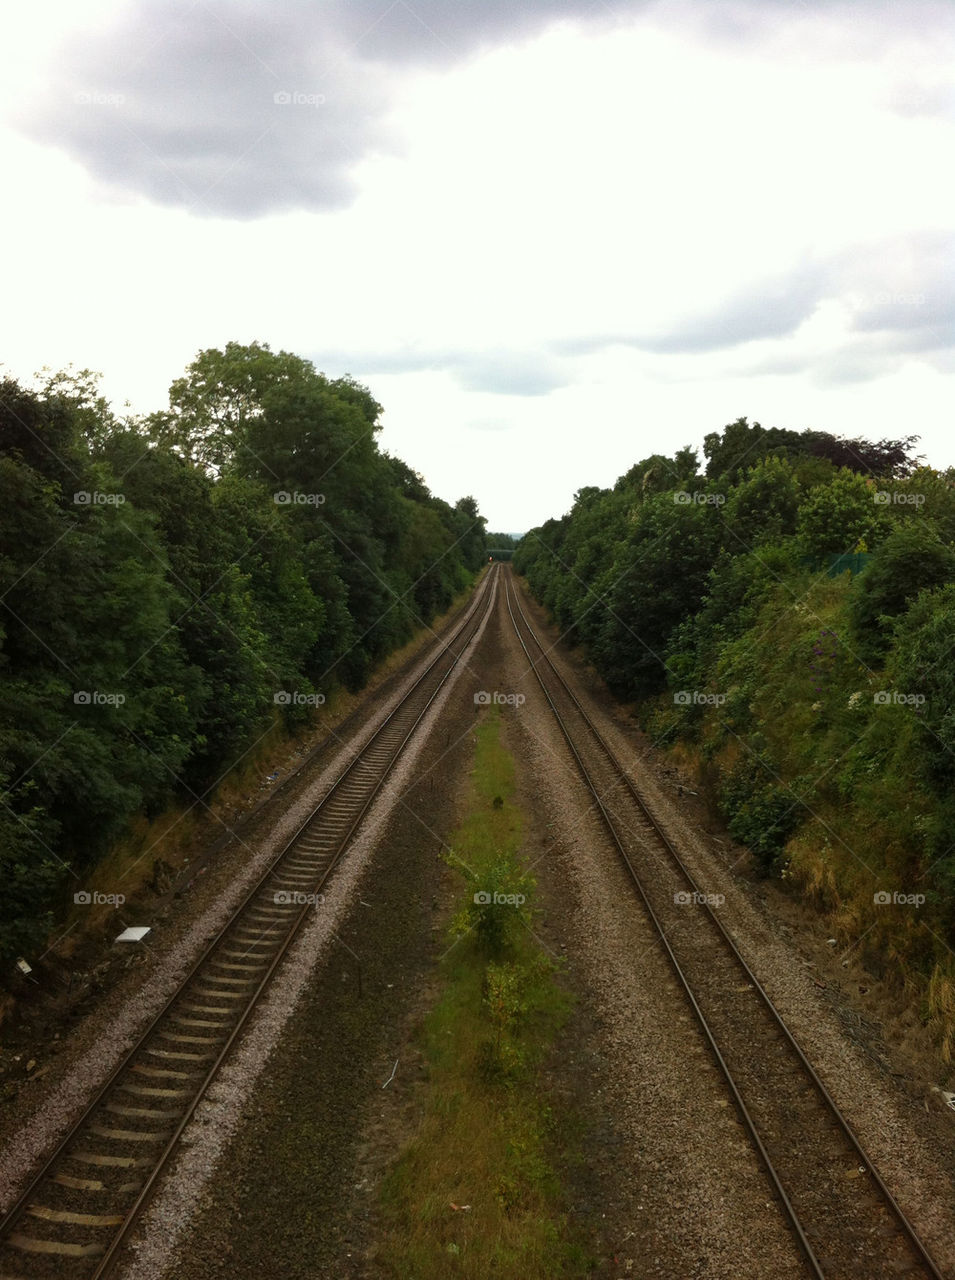 trees train lines railway by emmam